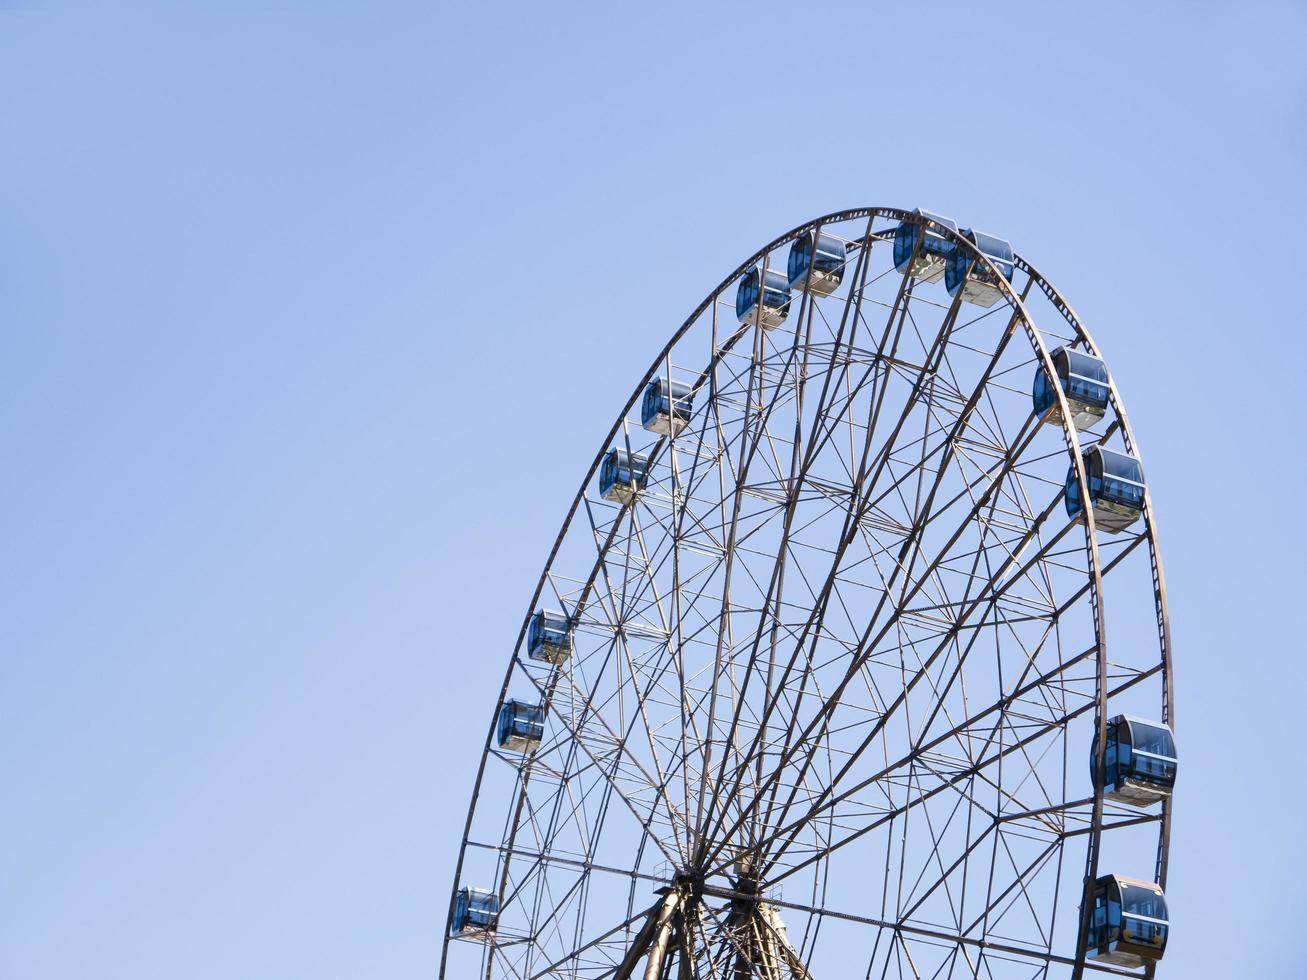 The ferris wheel in Sochi Park, Adler City, Russia, 2019 photo